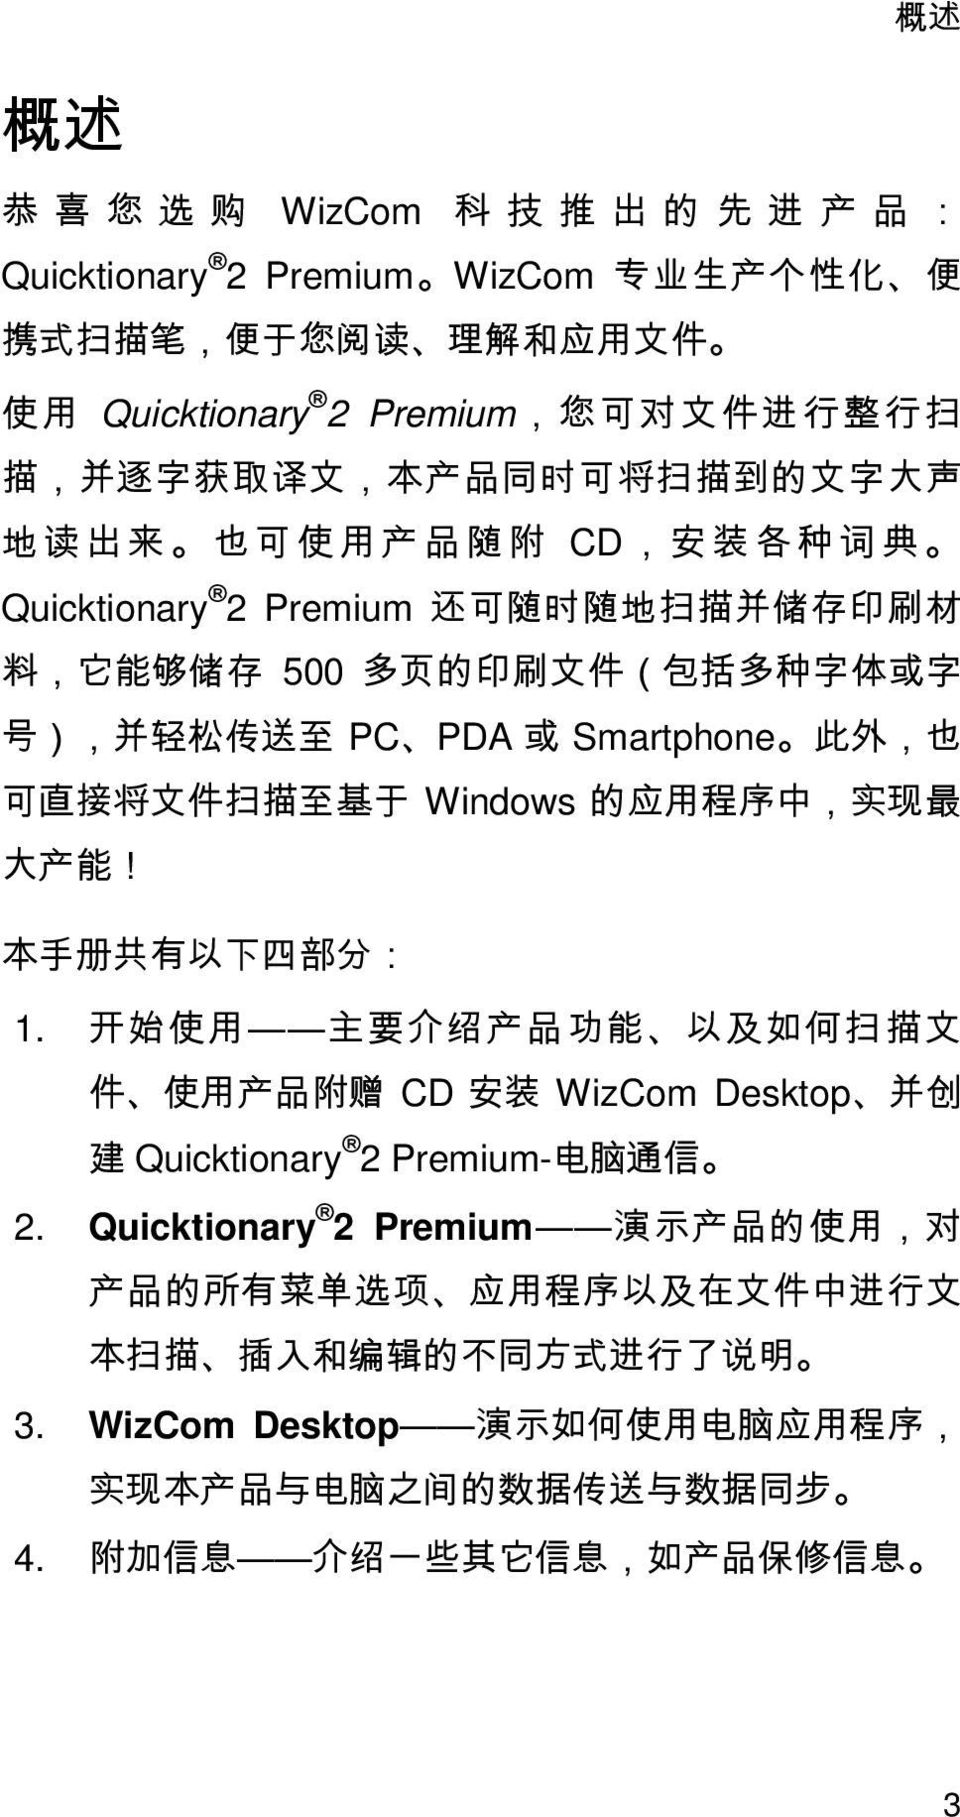 R Windows 䤓ㄣ䞷䲚ㄞ 䘿㦏 ℶ 厌 㦻㓚 㦘 ⅴₚ 捷 ⒕ 1. ⱚ 䞷 尐 ⅚ 兜 ℶ 厌 ᇬⅴ Ⱁ 㓺㙞㠖 ↅᇬ 䞷 ℶ 棓忯 CD 孔 WizCom Desktopᇬㄅ ㆉ Quicktionary 2 Premium- 䟄厠抩 ᇭ 2.